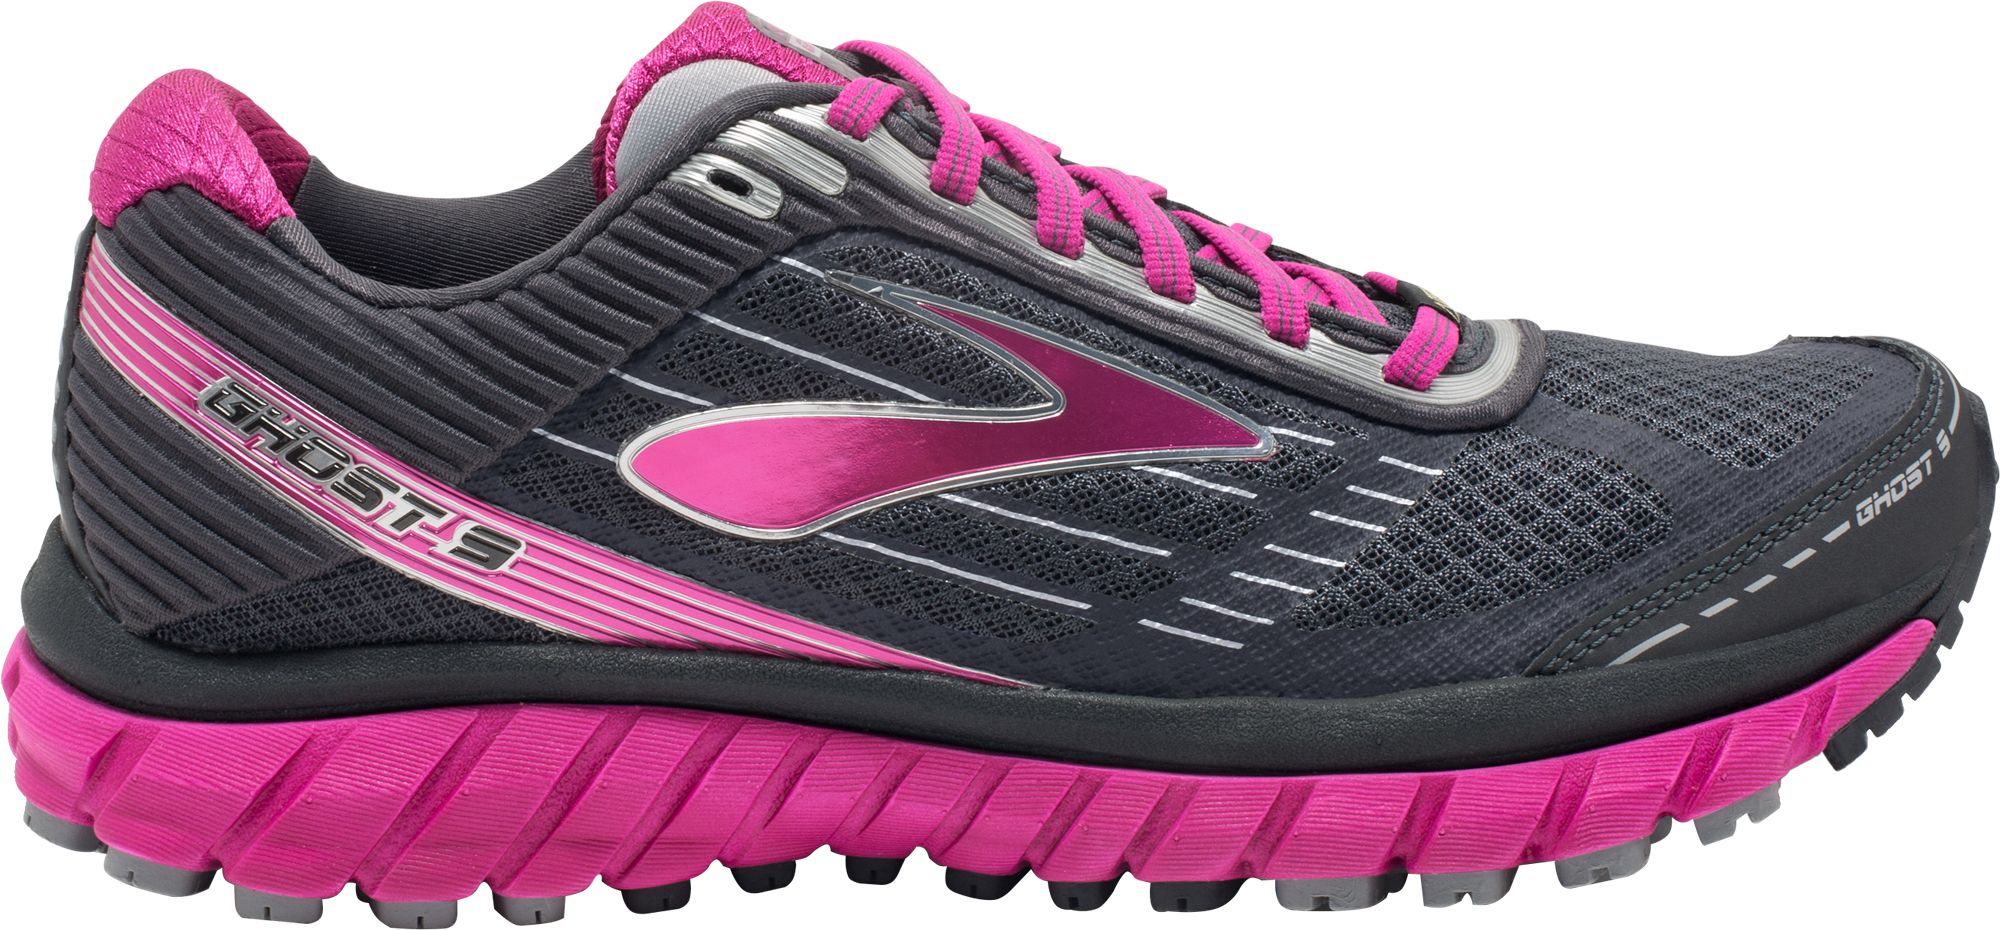 Women's Running Shoes | DICK'S Sporting Goods